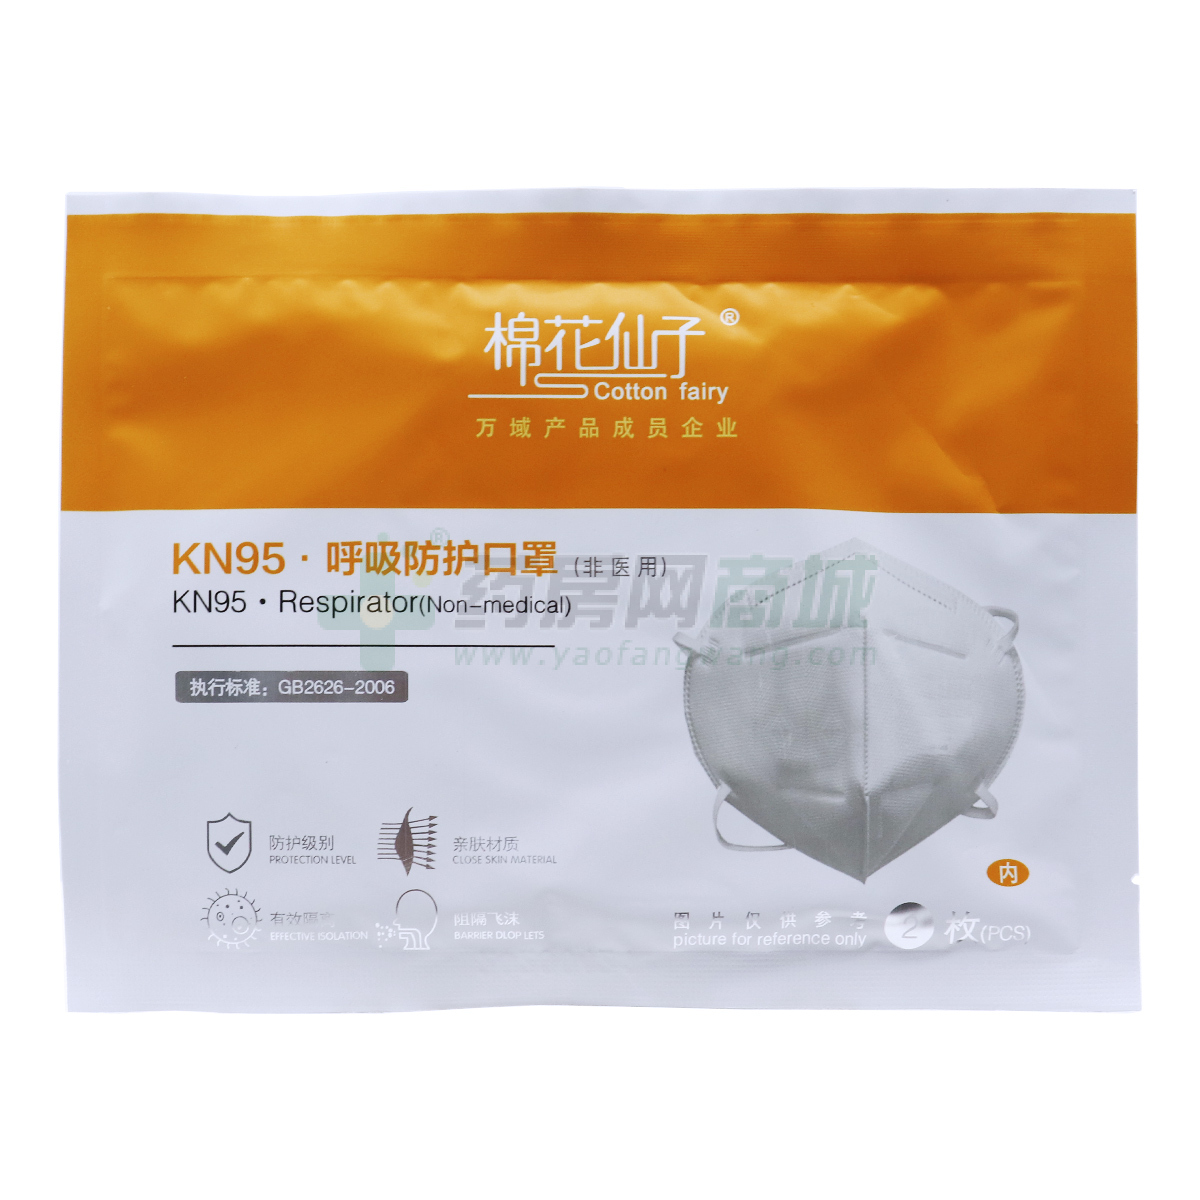 KN95·呼吸防护口罩(非医用)